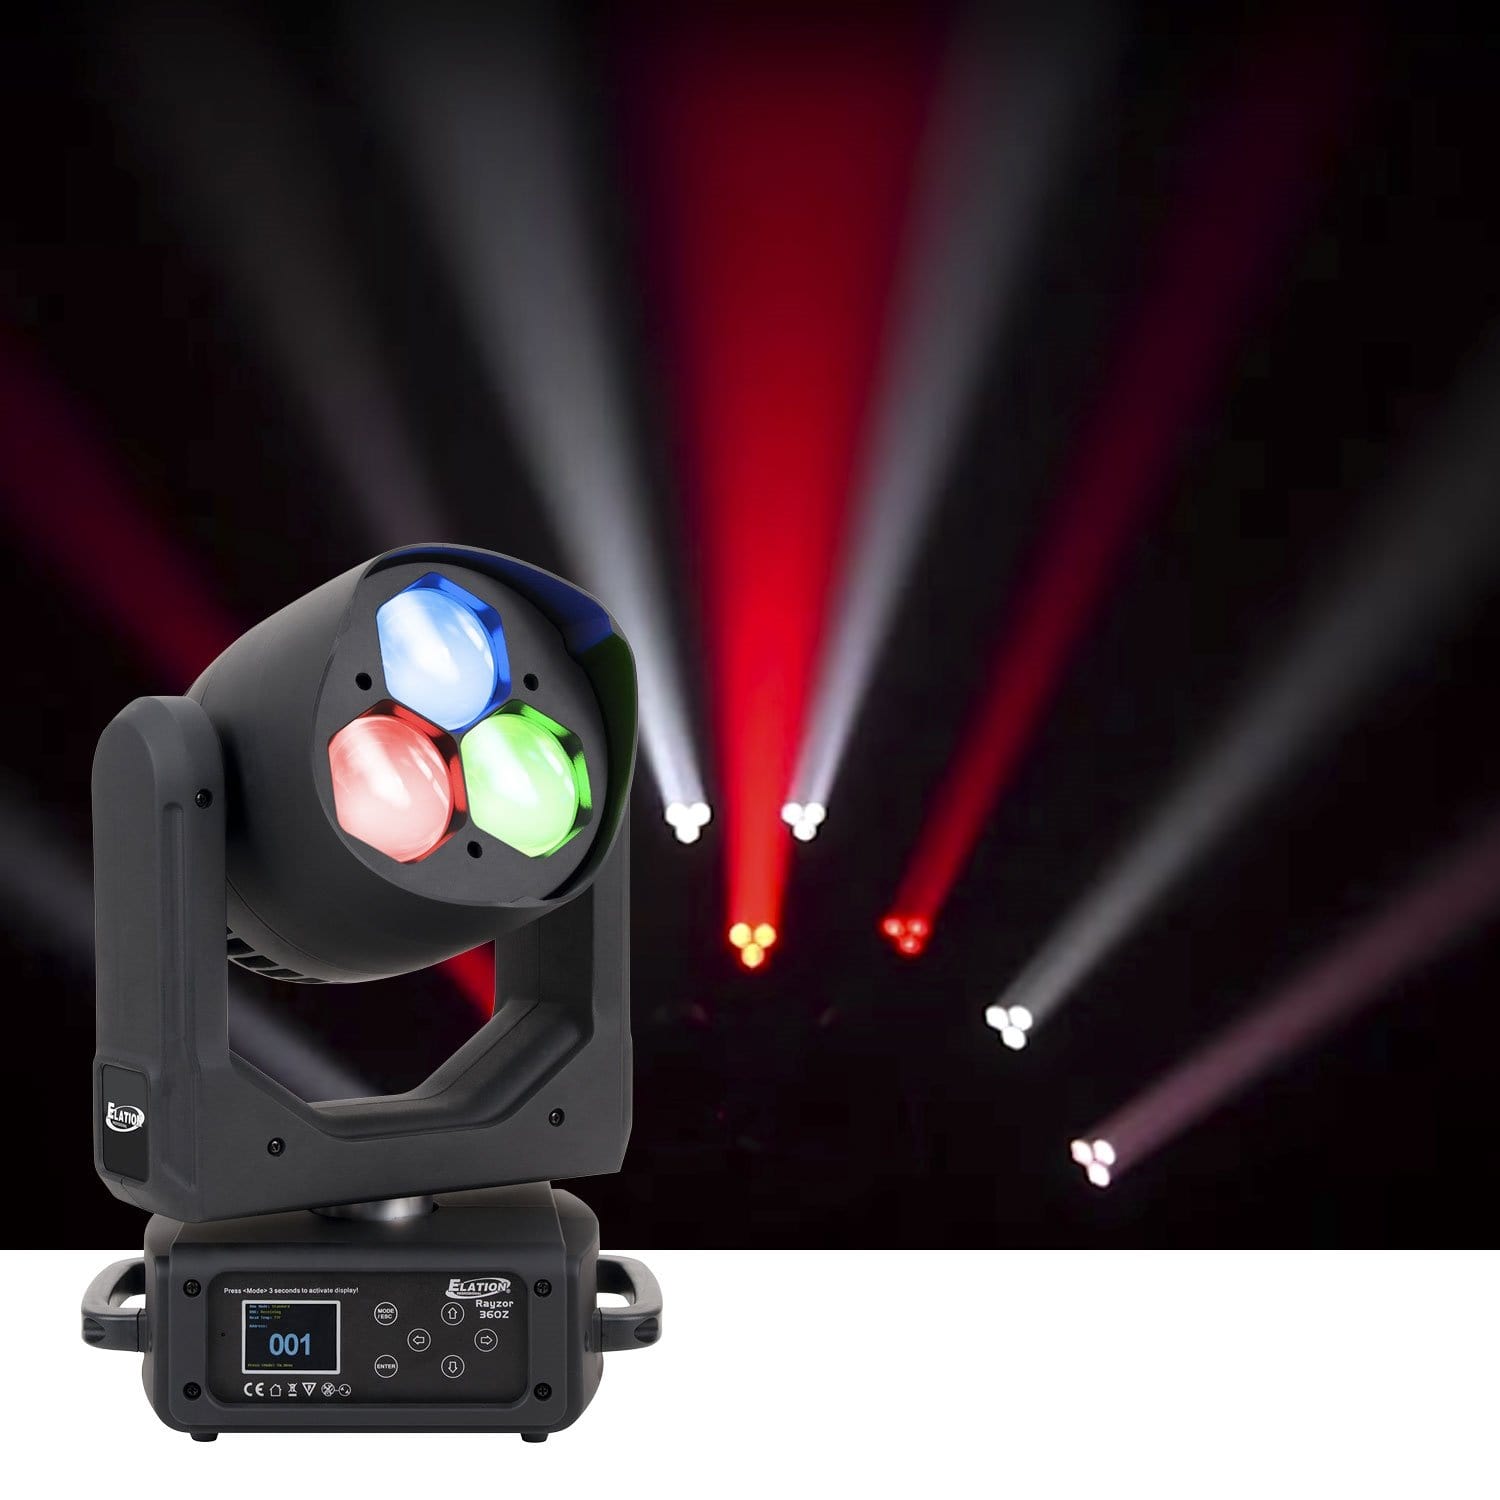 Elation Rayzor 360Z 3x60-Watt RGBW LED Moving Head Light - PSSL ProSound and Stage Lighting